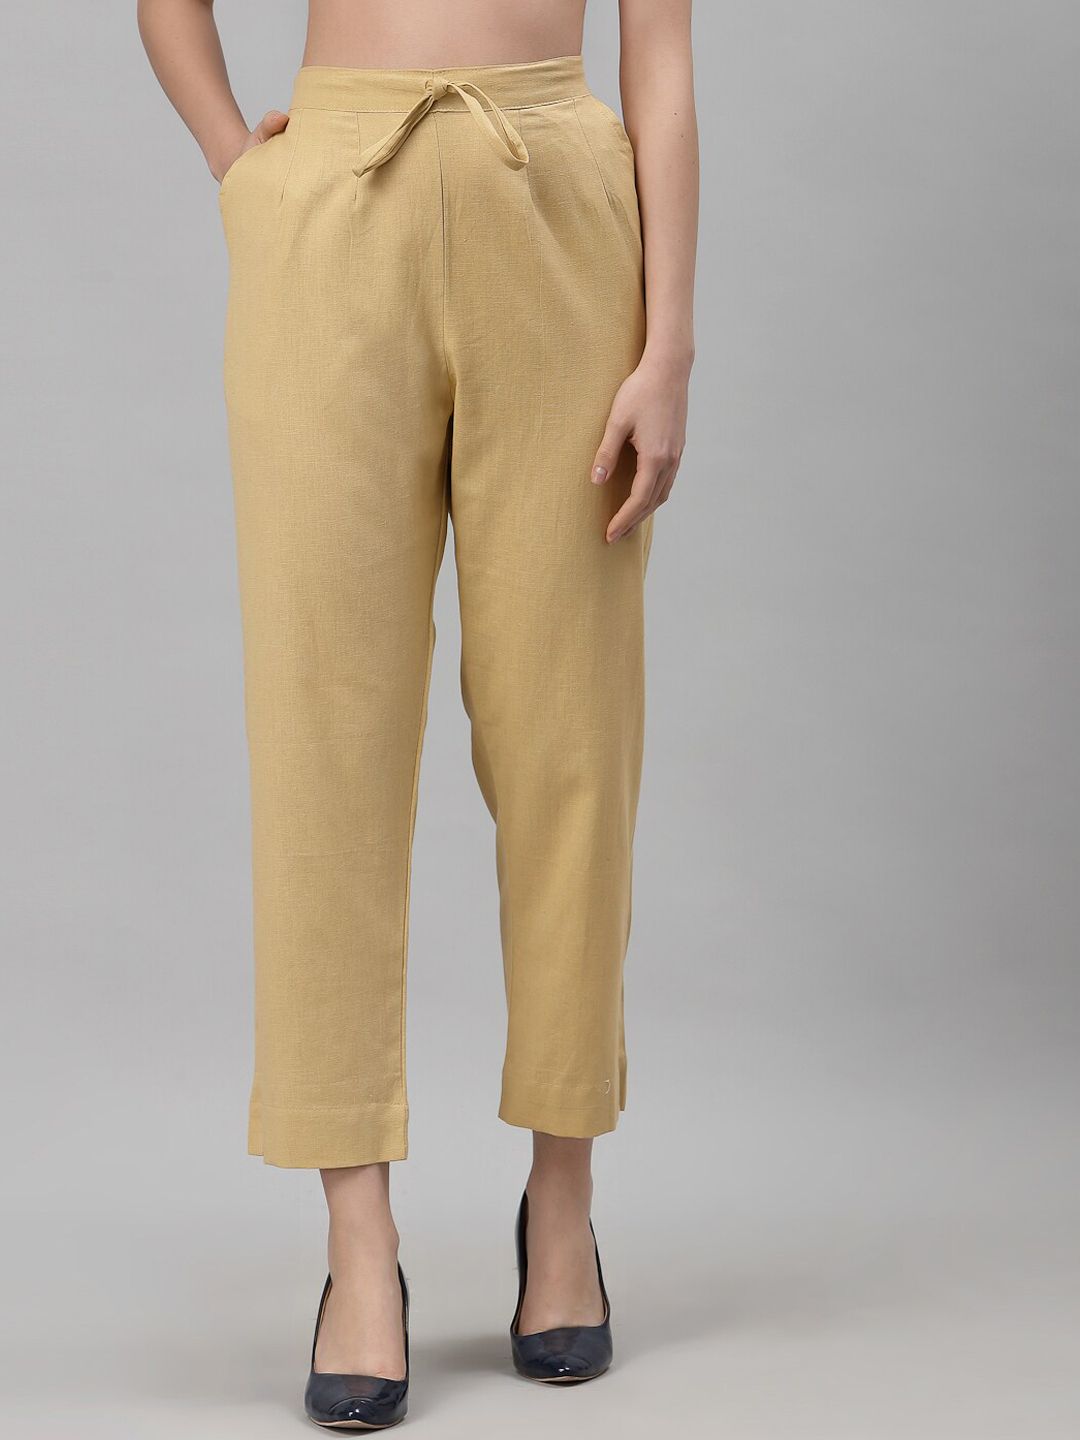 NEUDIS Women Camel Brown Classic Trousers Price in India